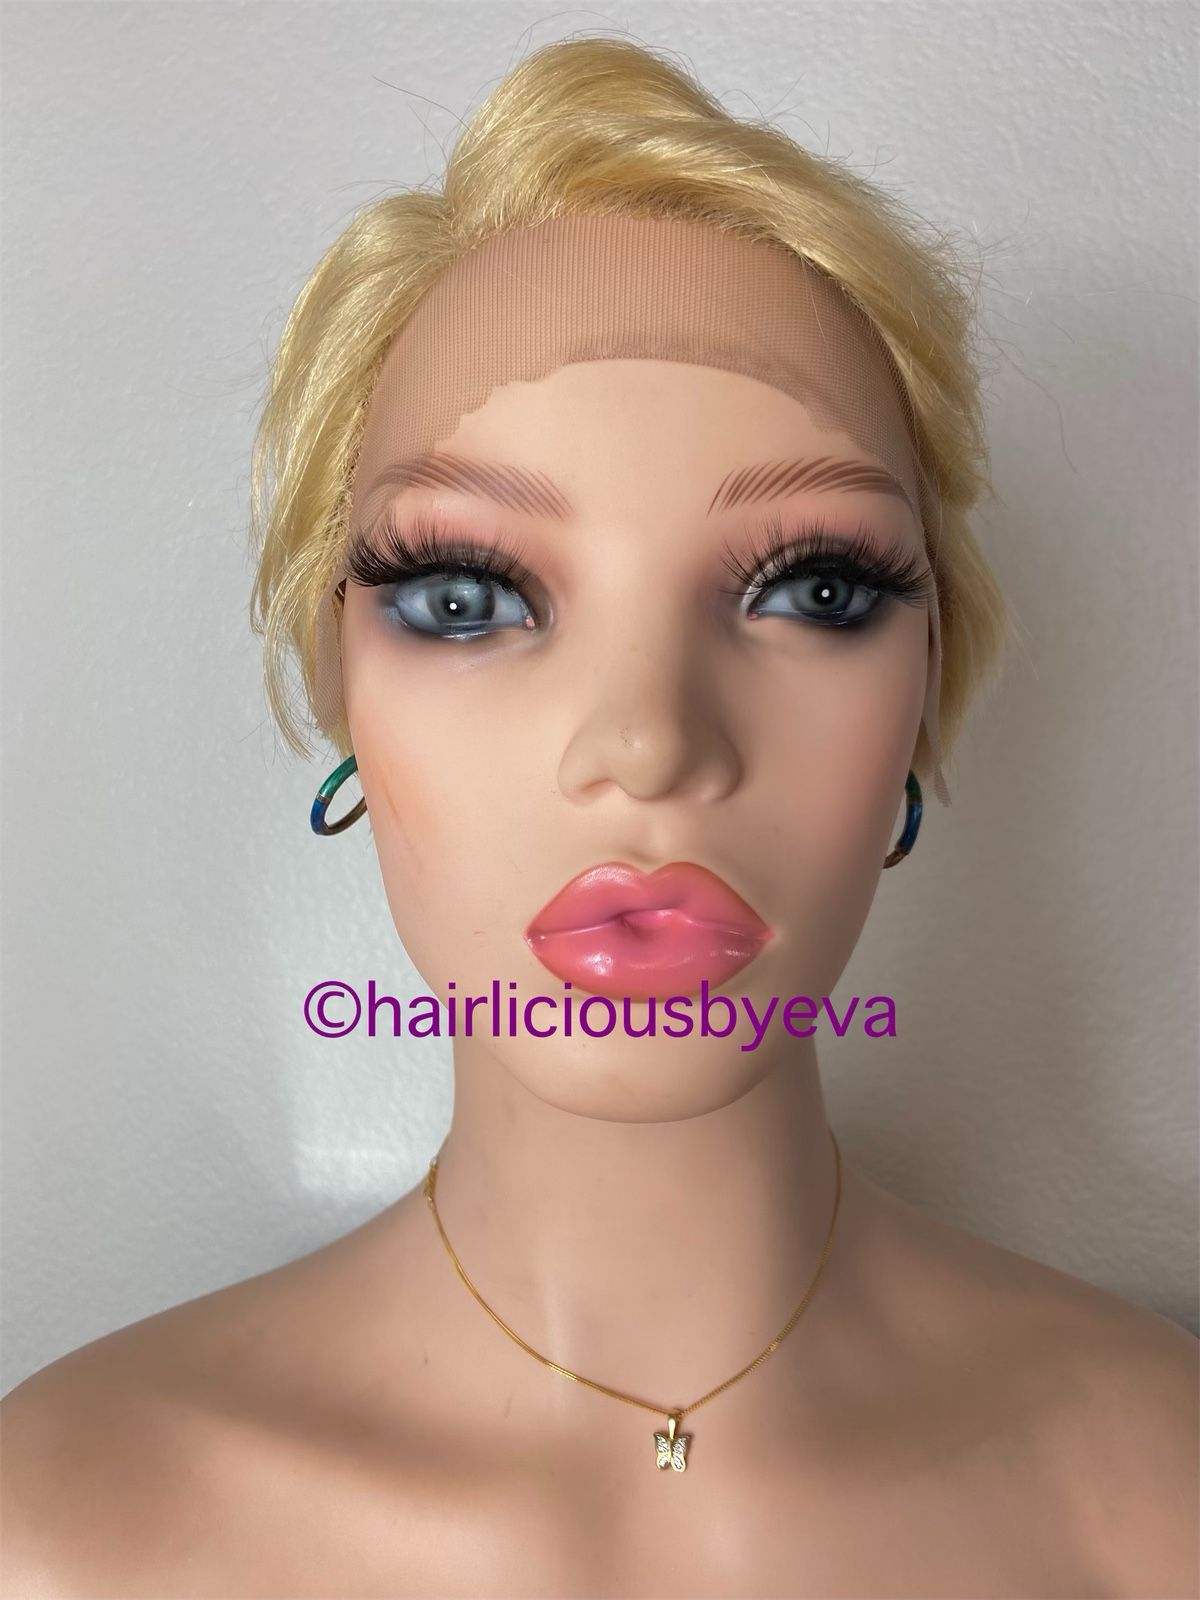 100 Percent Human Hair Wig Short Pixie Cut Blonde 613 Lace Front Side Part